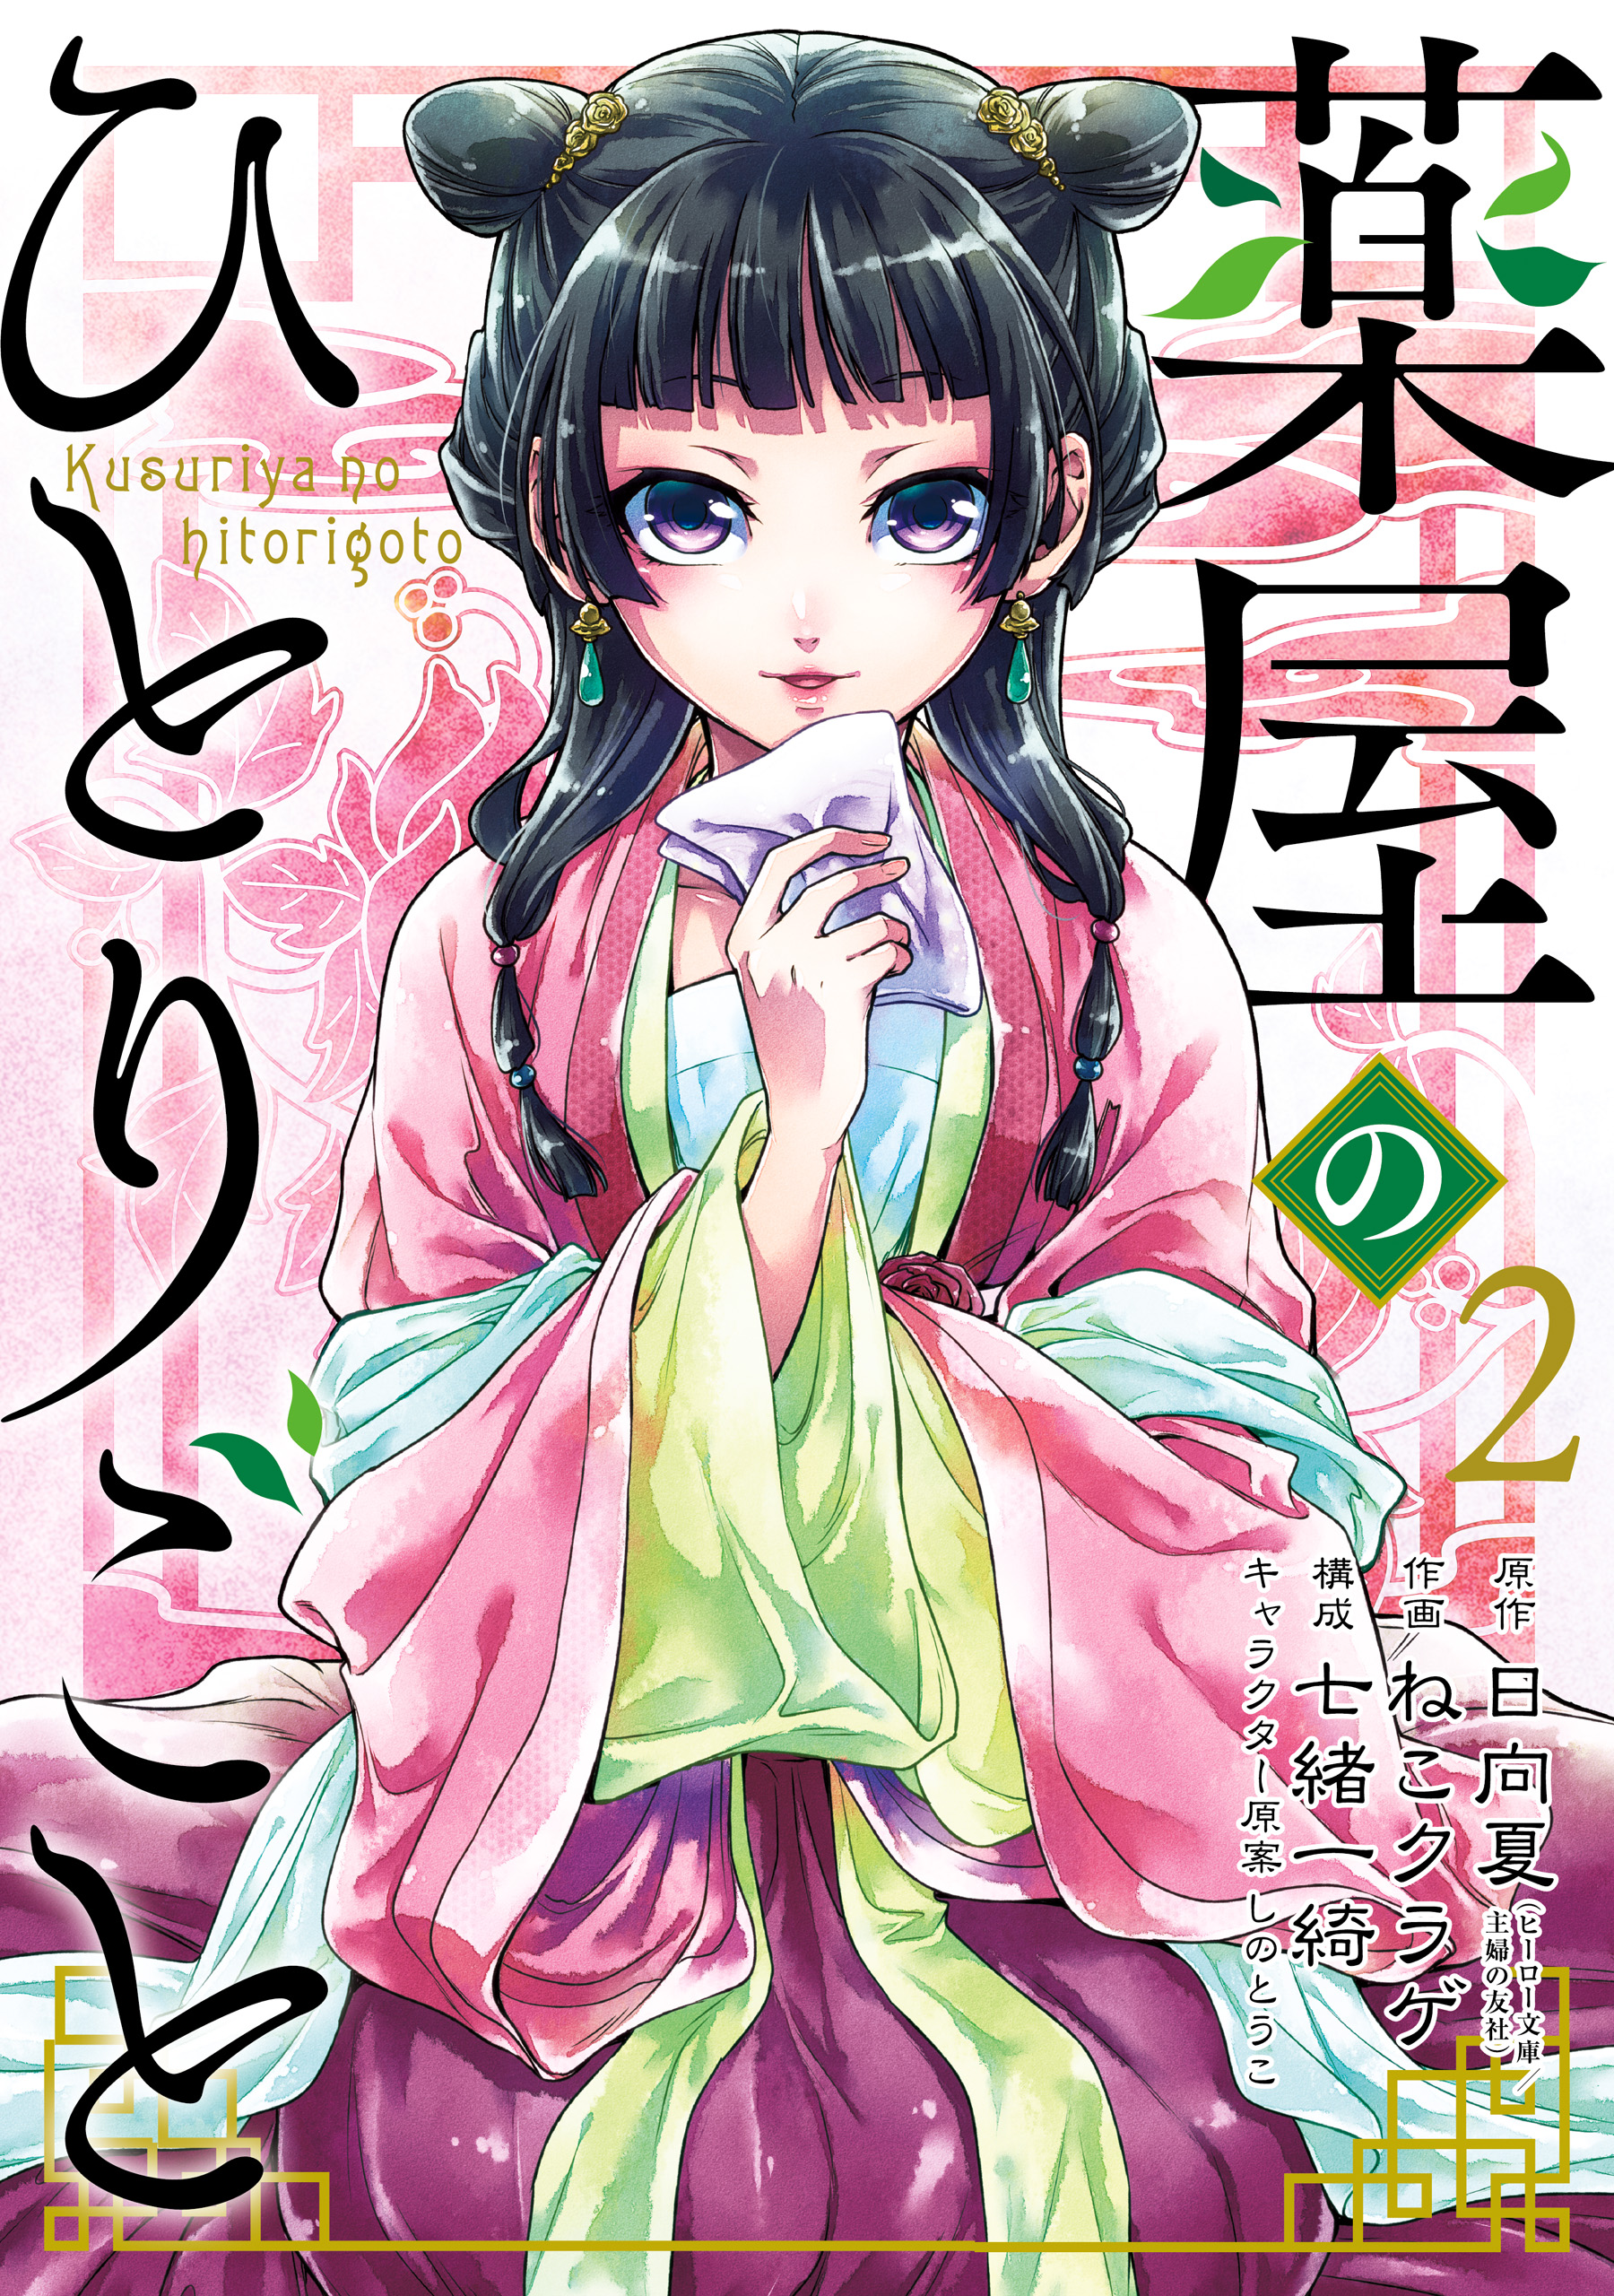 Kusuriya no Hitorigoto TV Anime Adaptation Announced for 2023  Otaku Tale